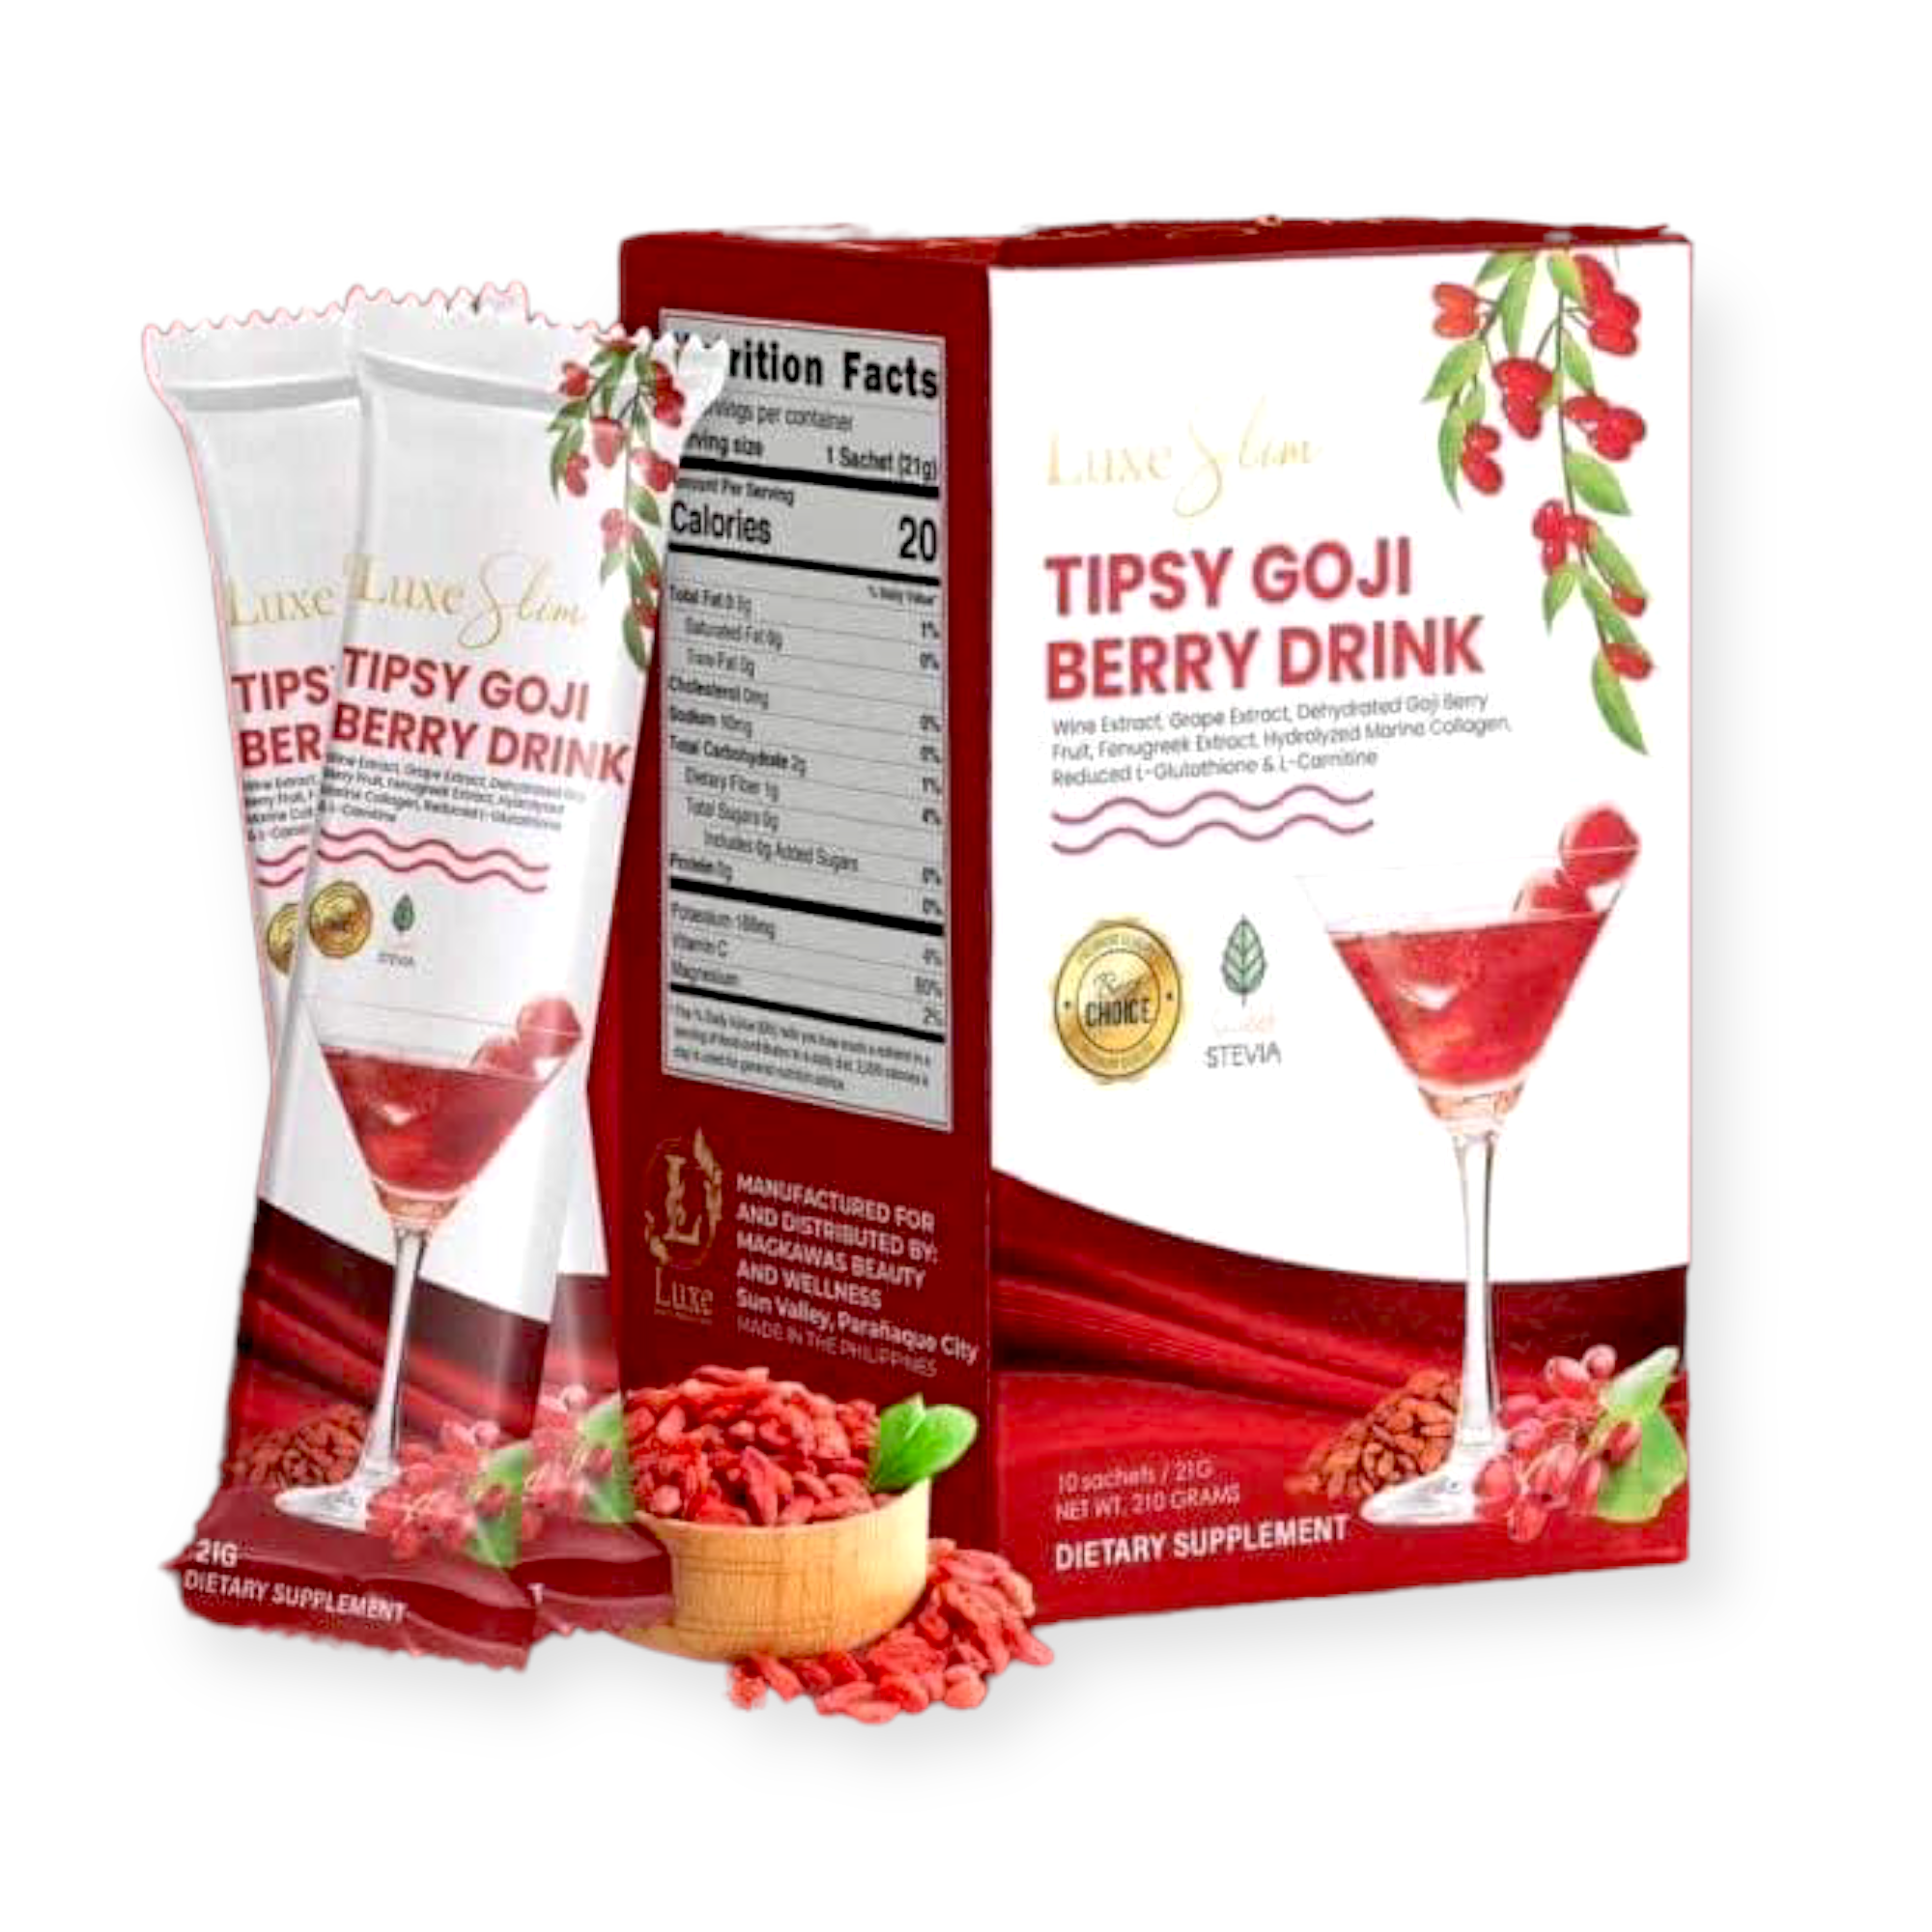 Luxe Slim - Tipsy Goji Berry Drink 21g x 10